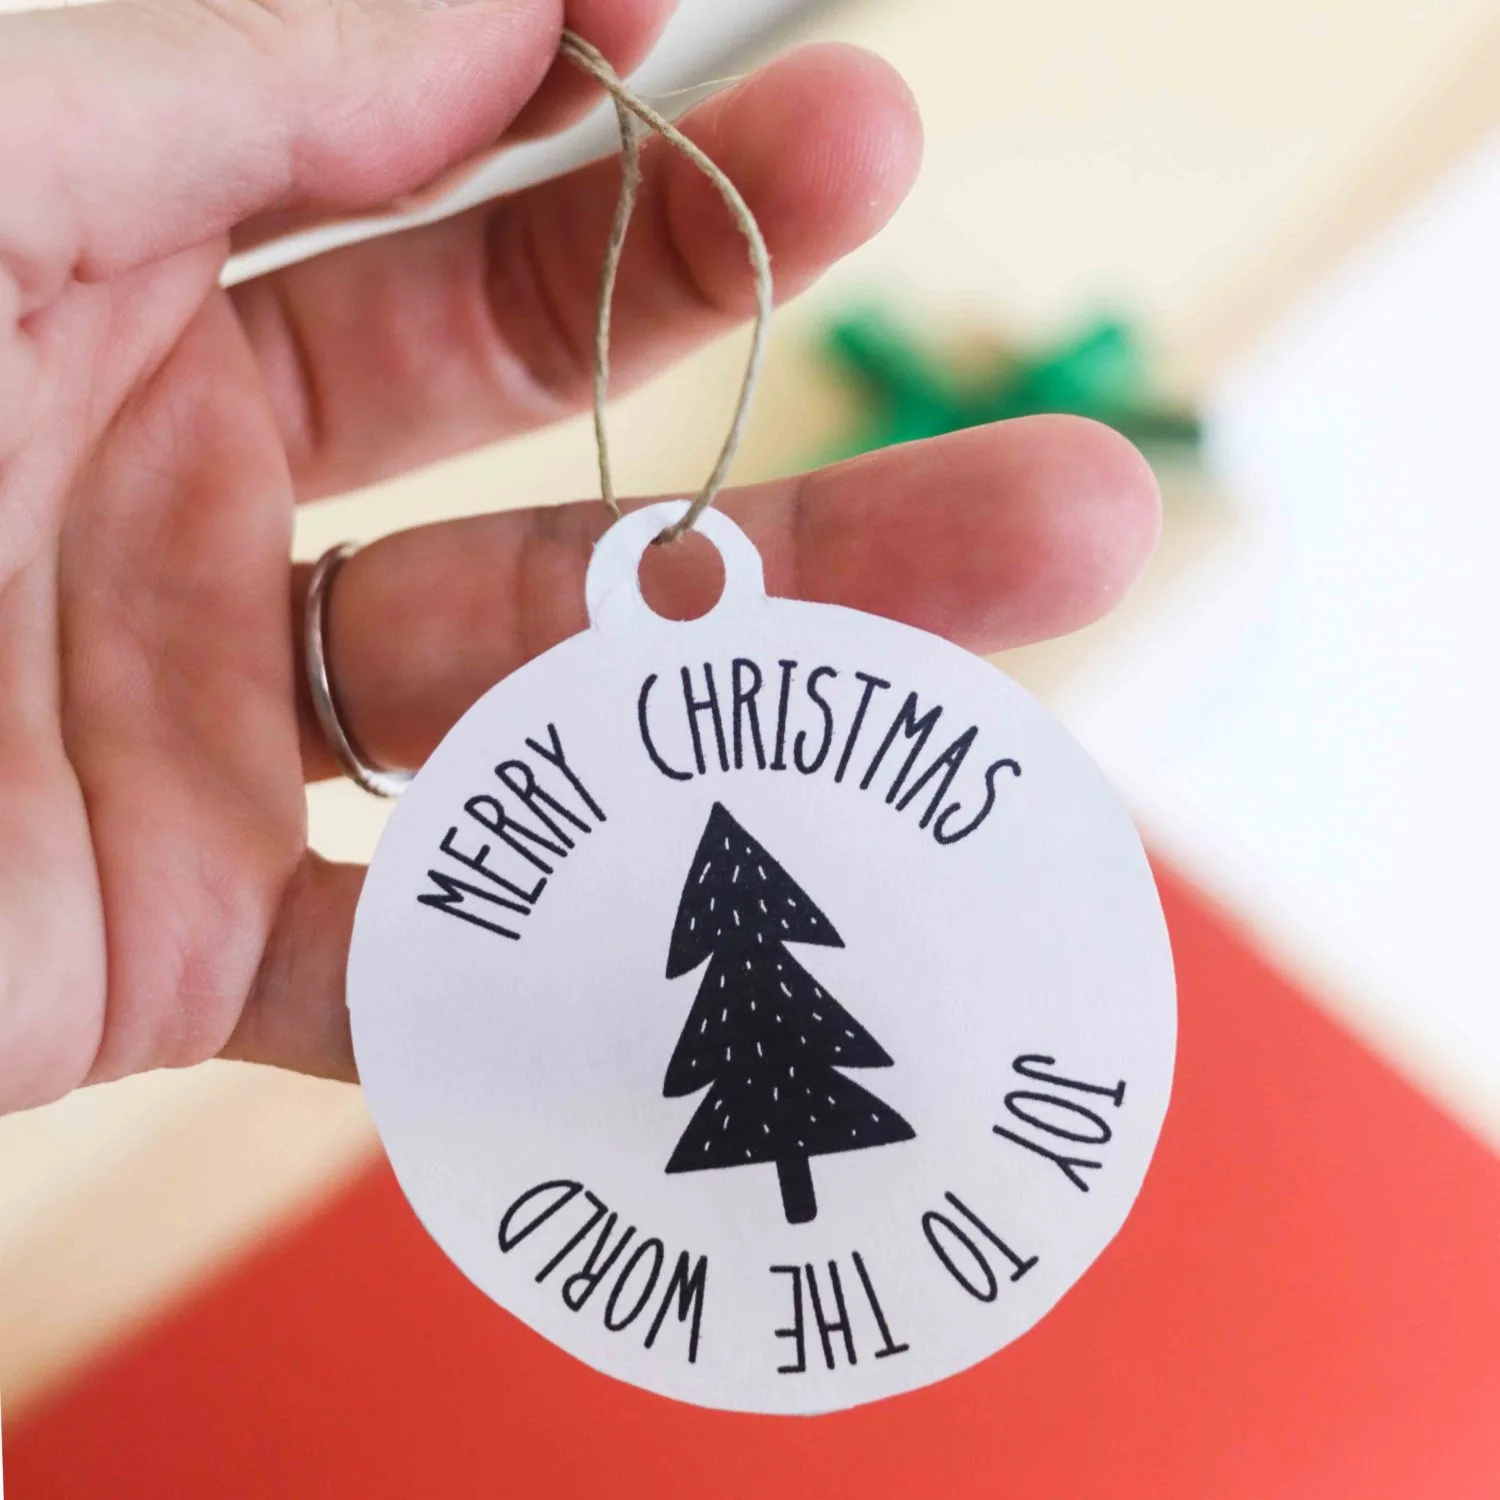 hemp cord to use with Christmas gift tags 